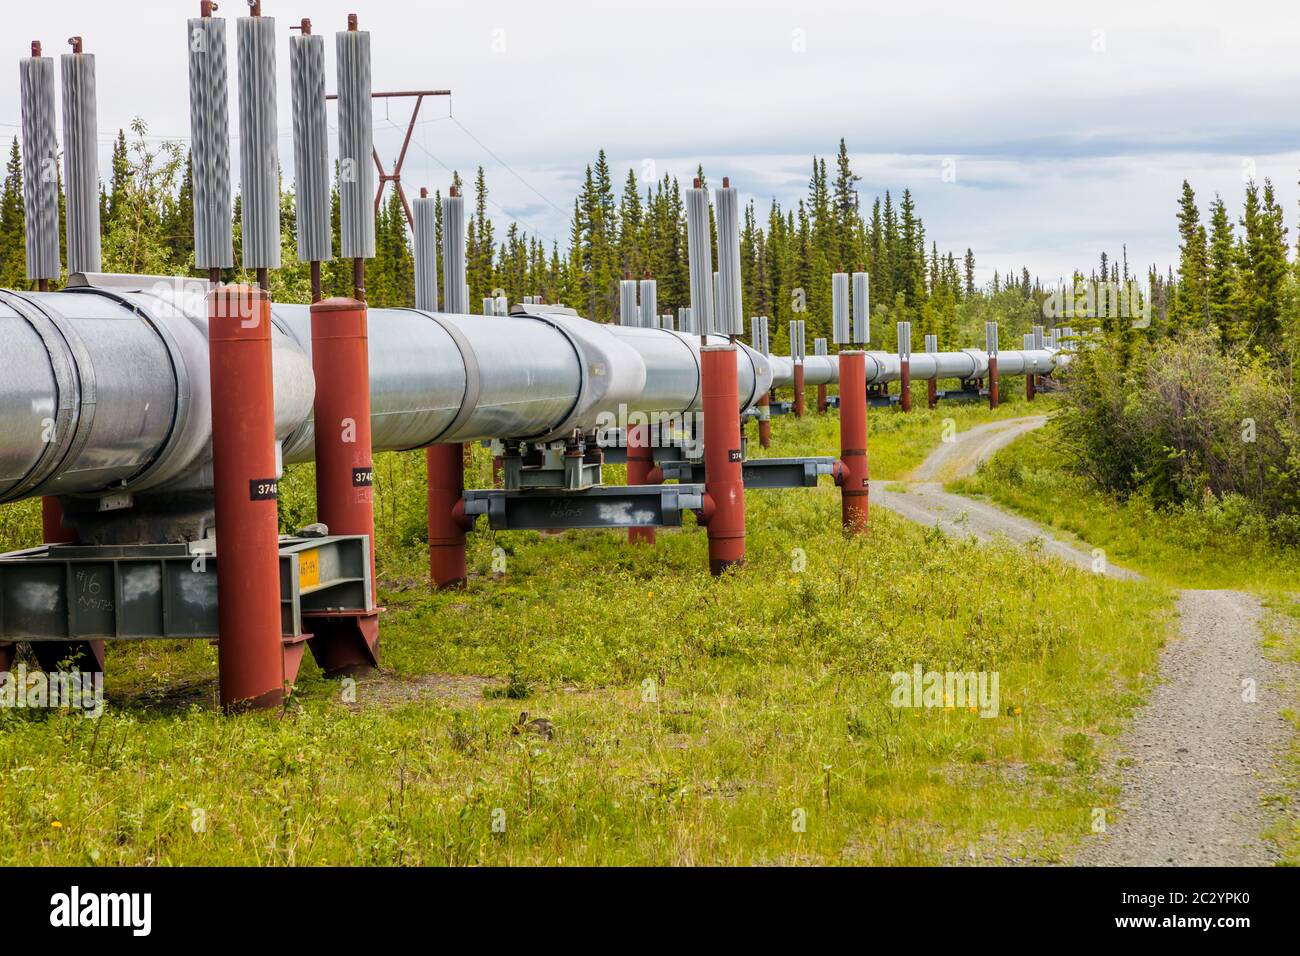 Alyeska Pipeline going through landscape, Glennallen, Alaska, USA Stock Photo